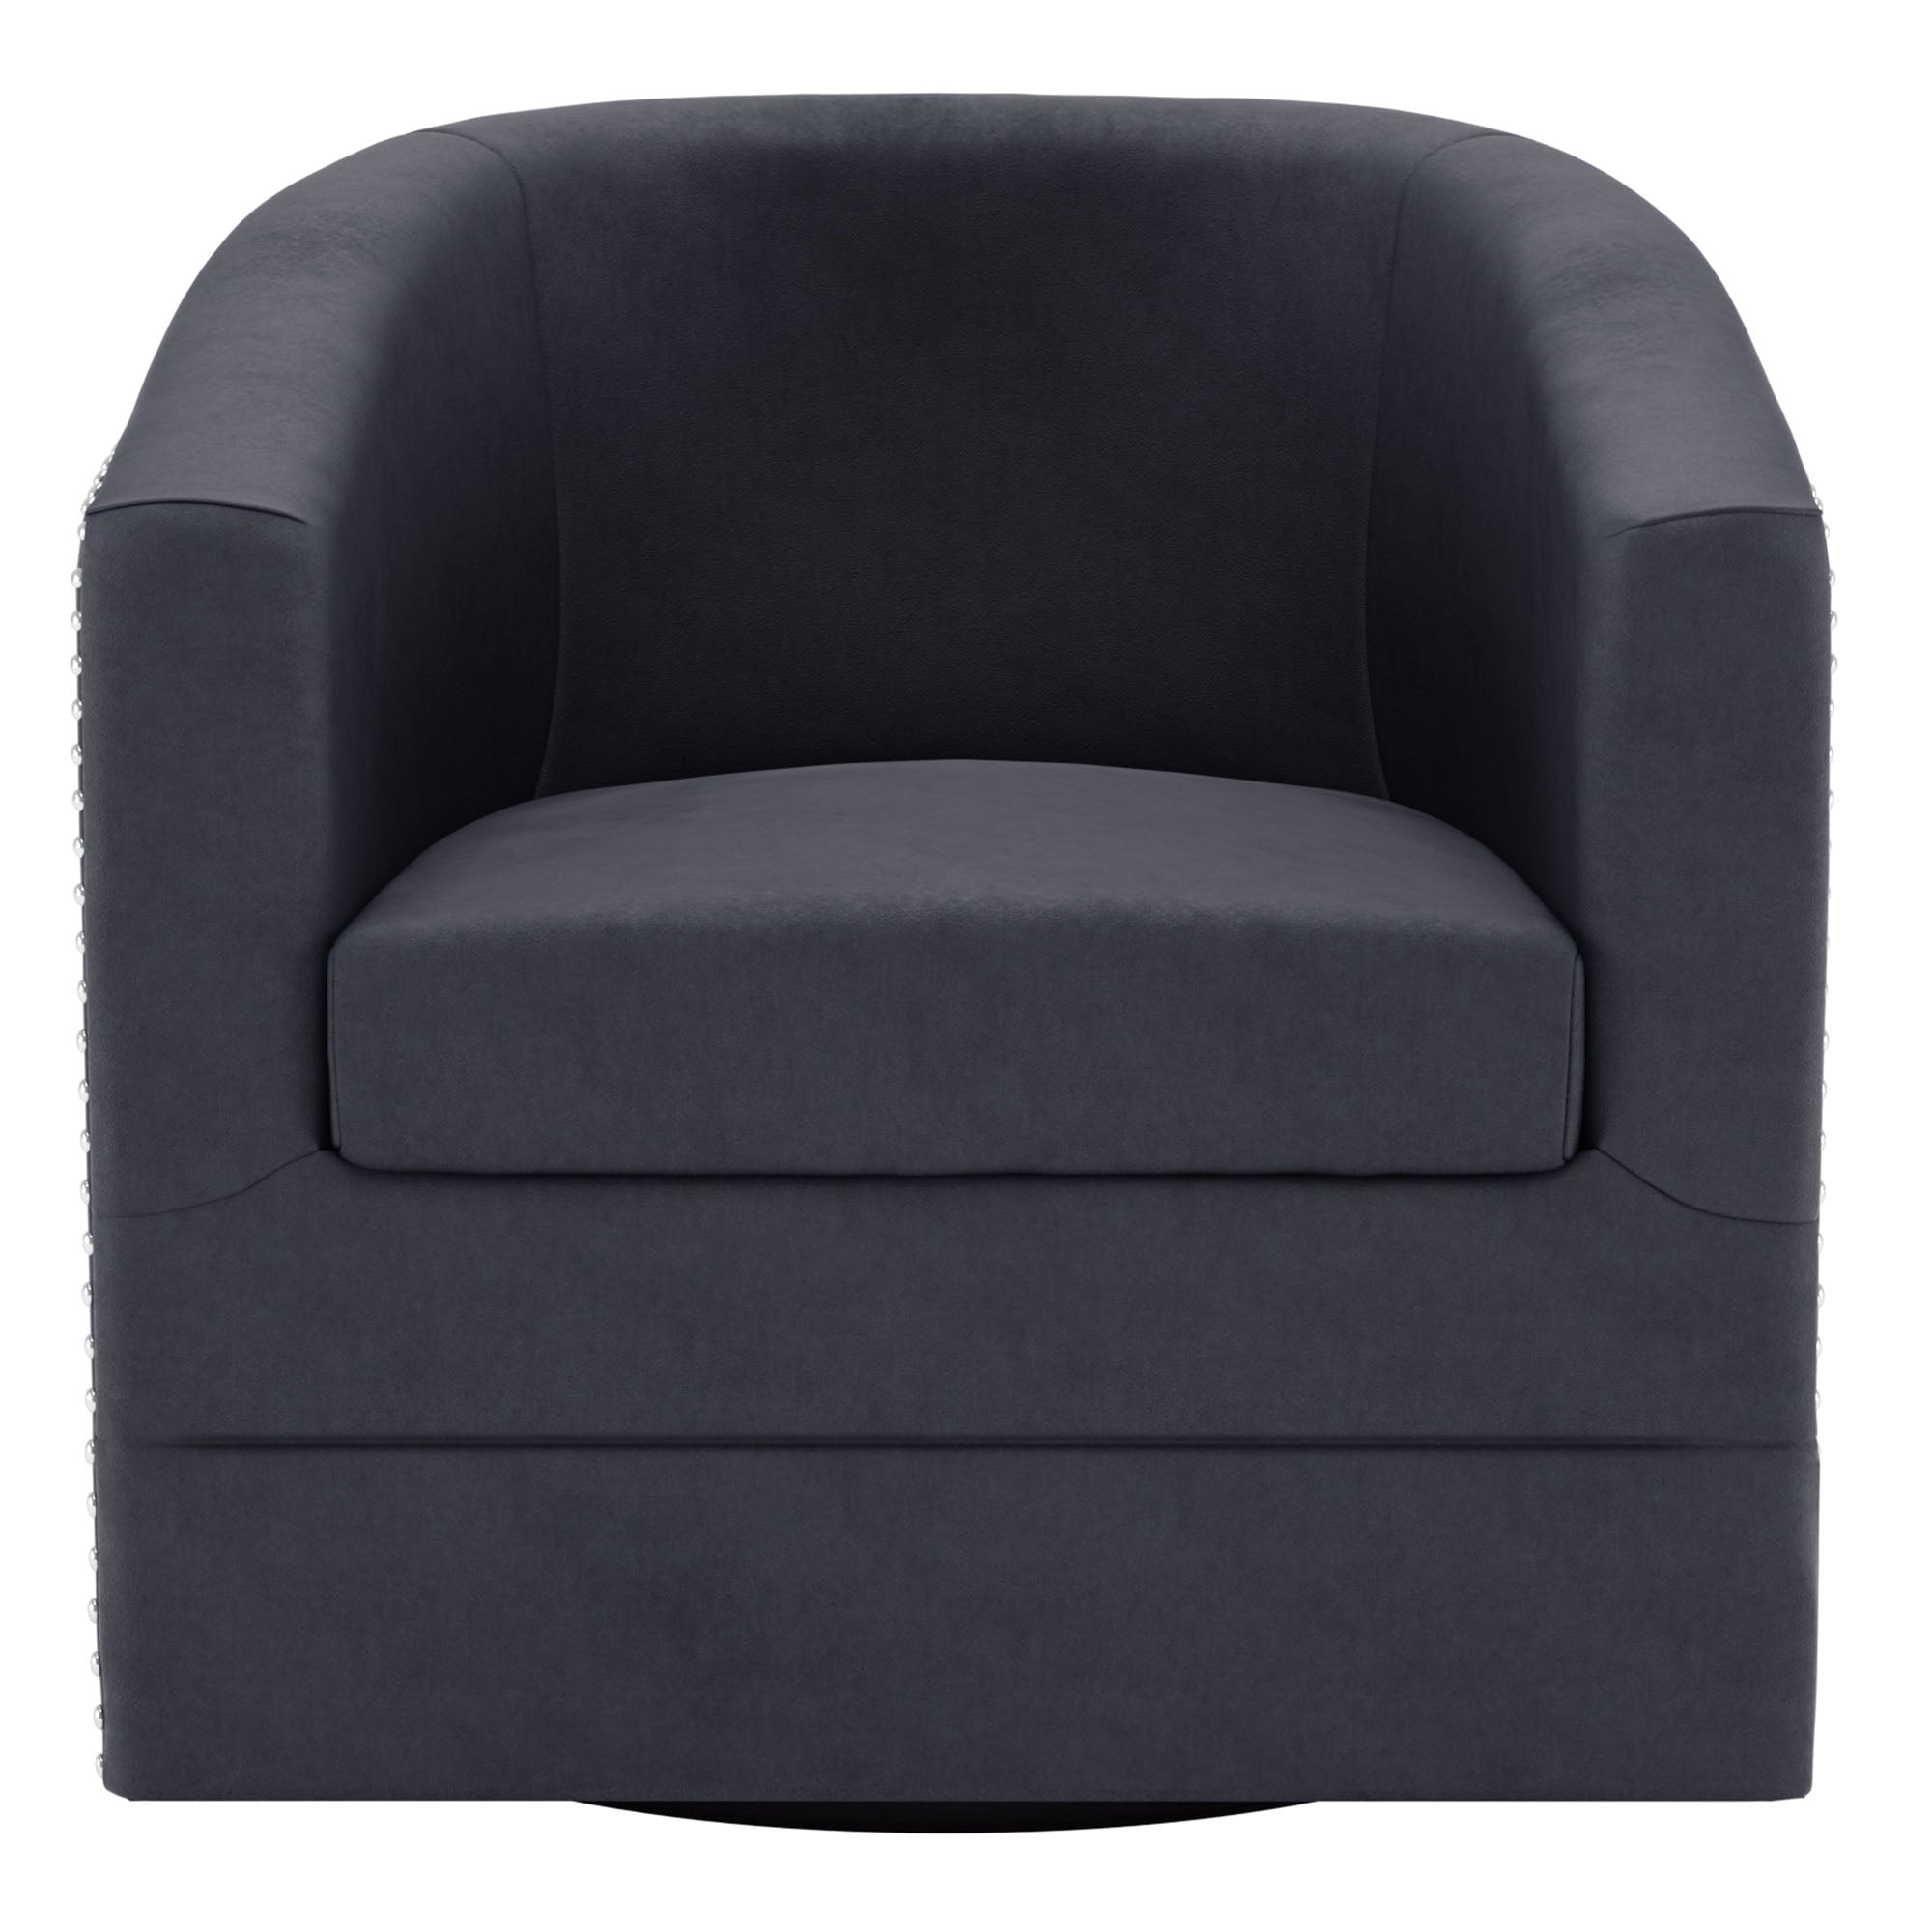 Velci Accent 360 Swivel Chair in Black 403-373BK